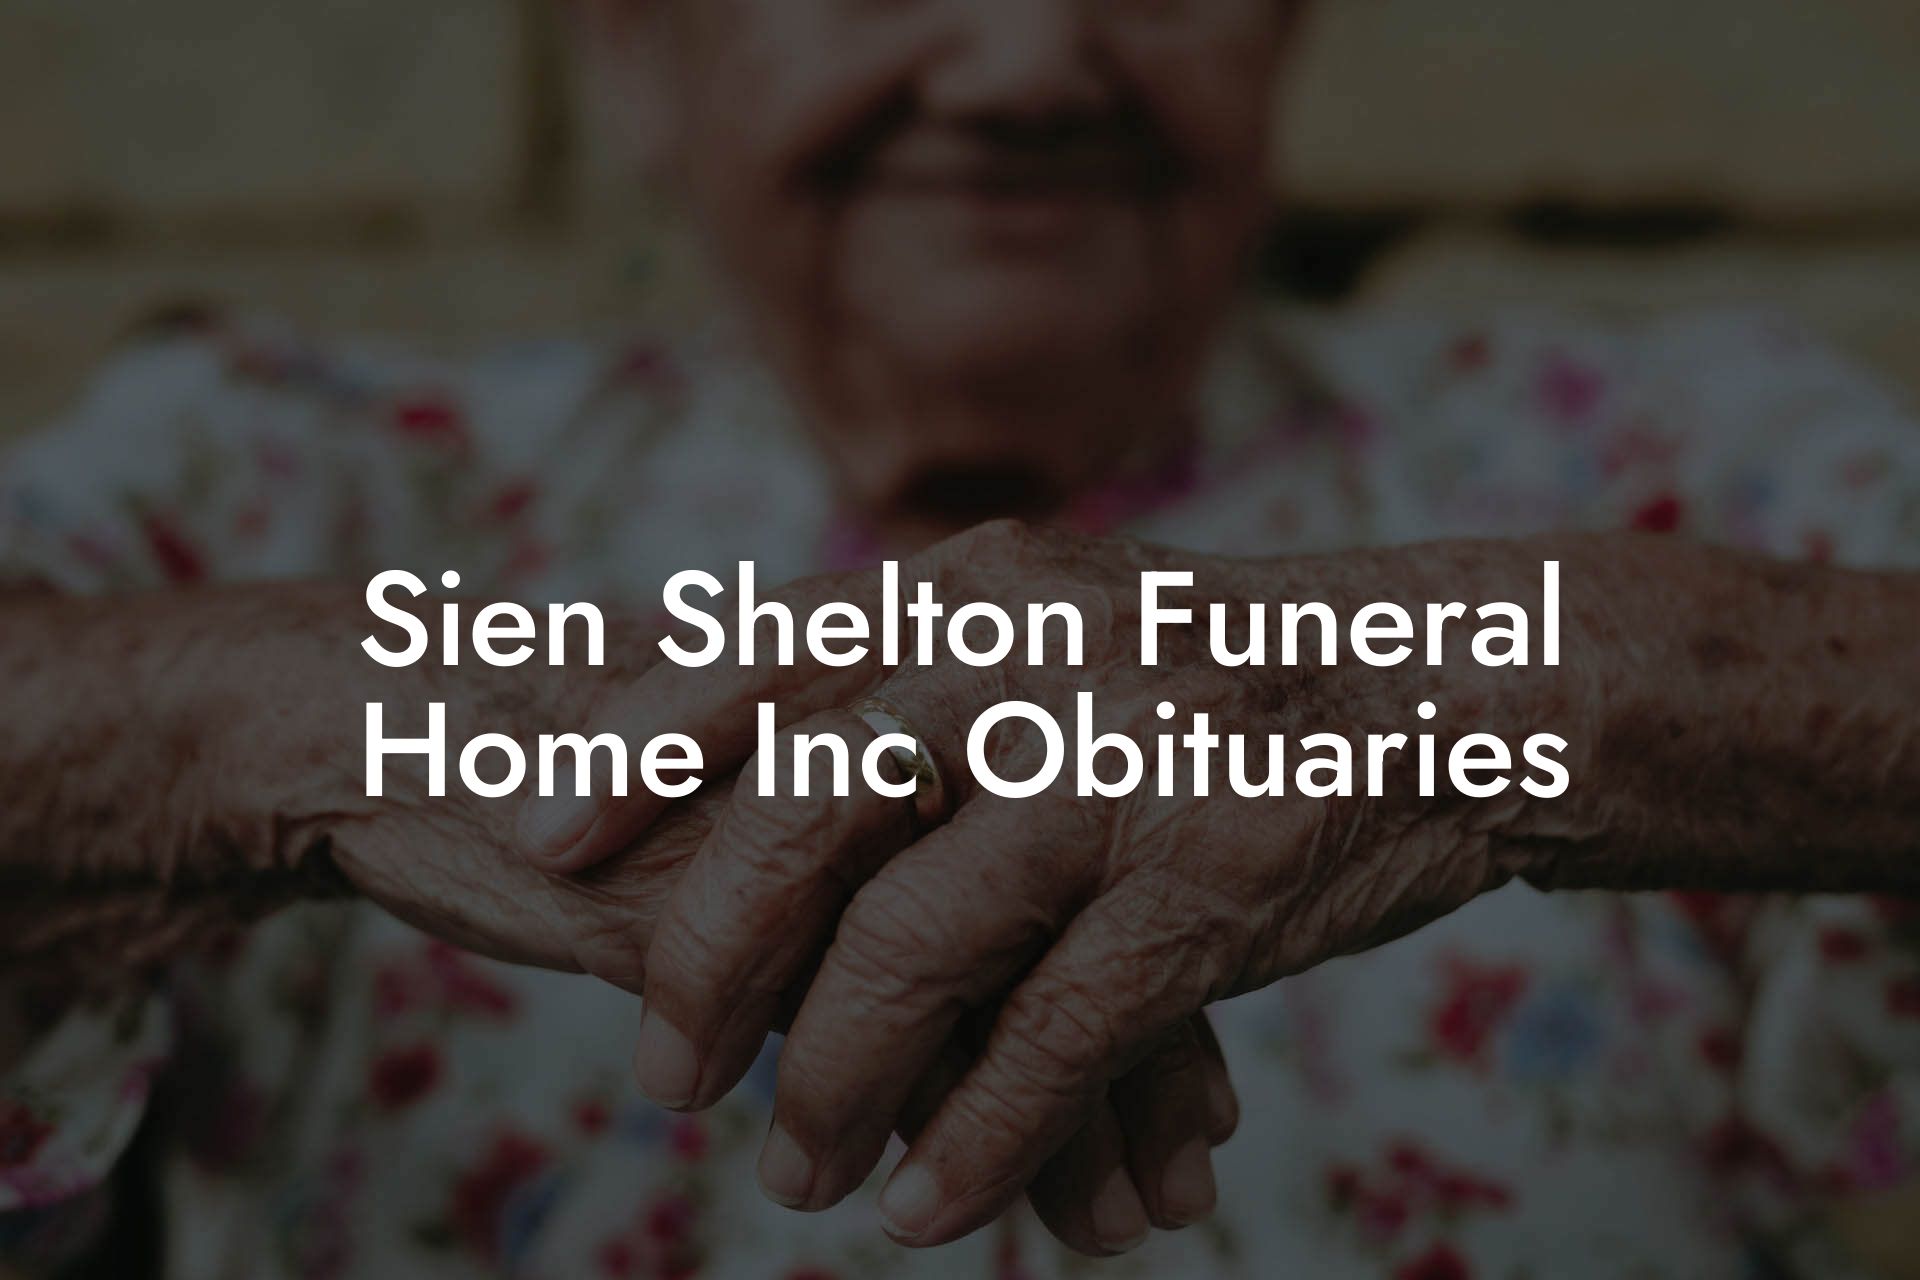 Sien Shelton Funeral Home Inc Obituaries